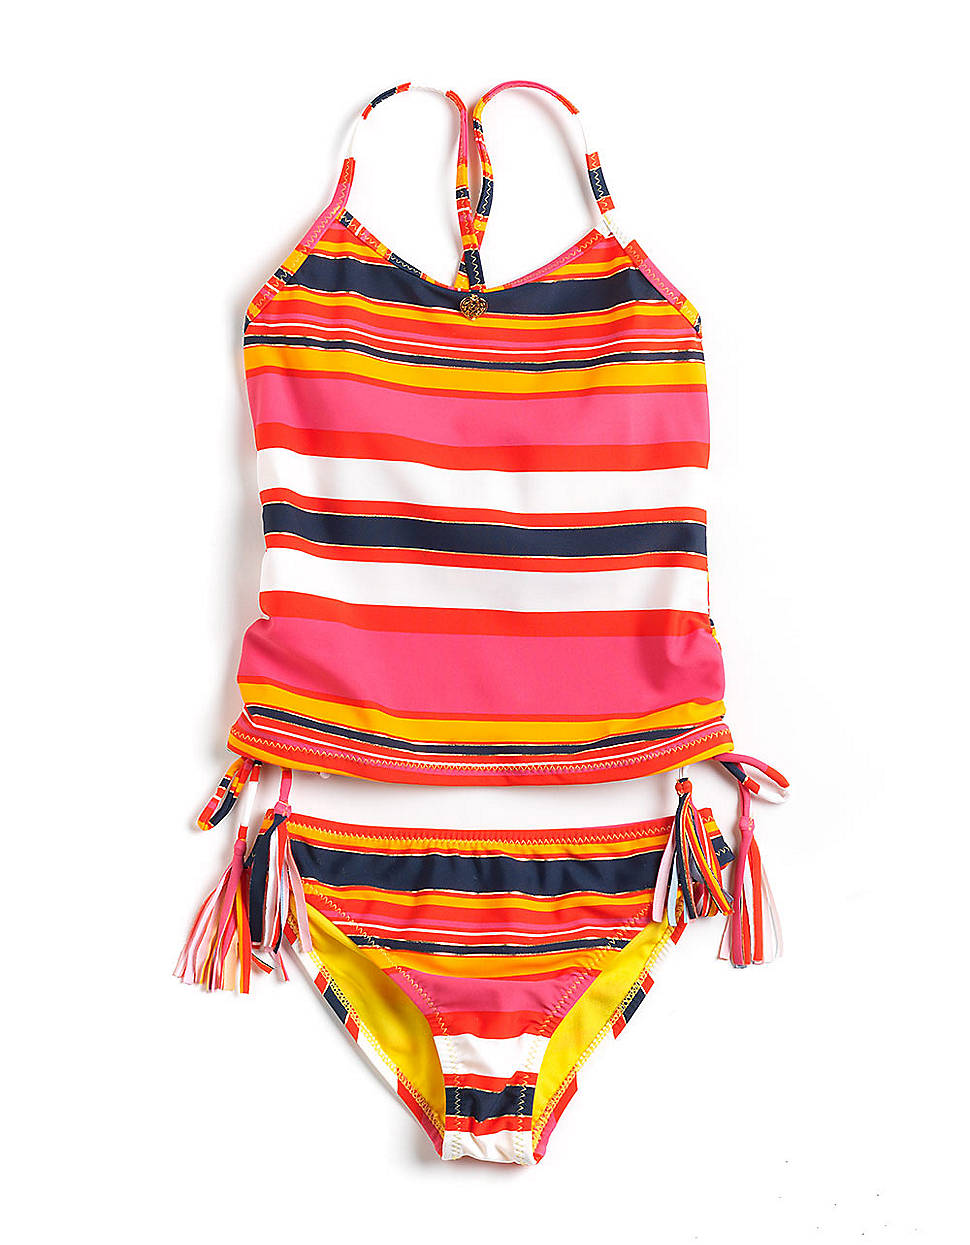 Lyst - Jessica Simpson Tweens 716 Metallic Stripe Tankini Swimsuit